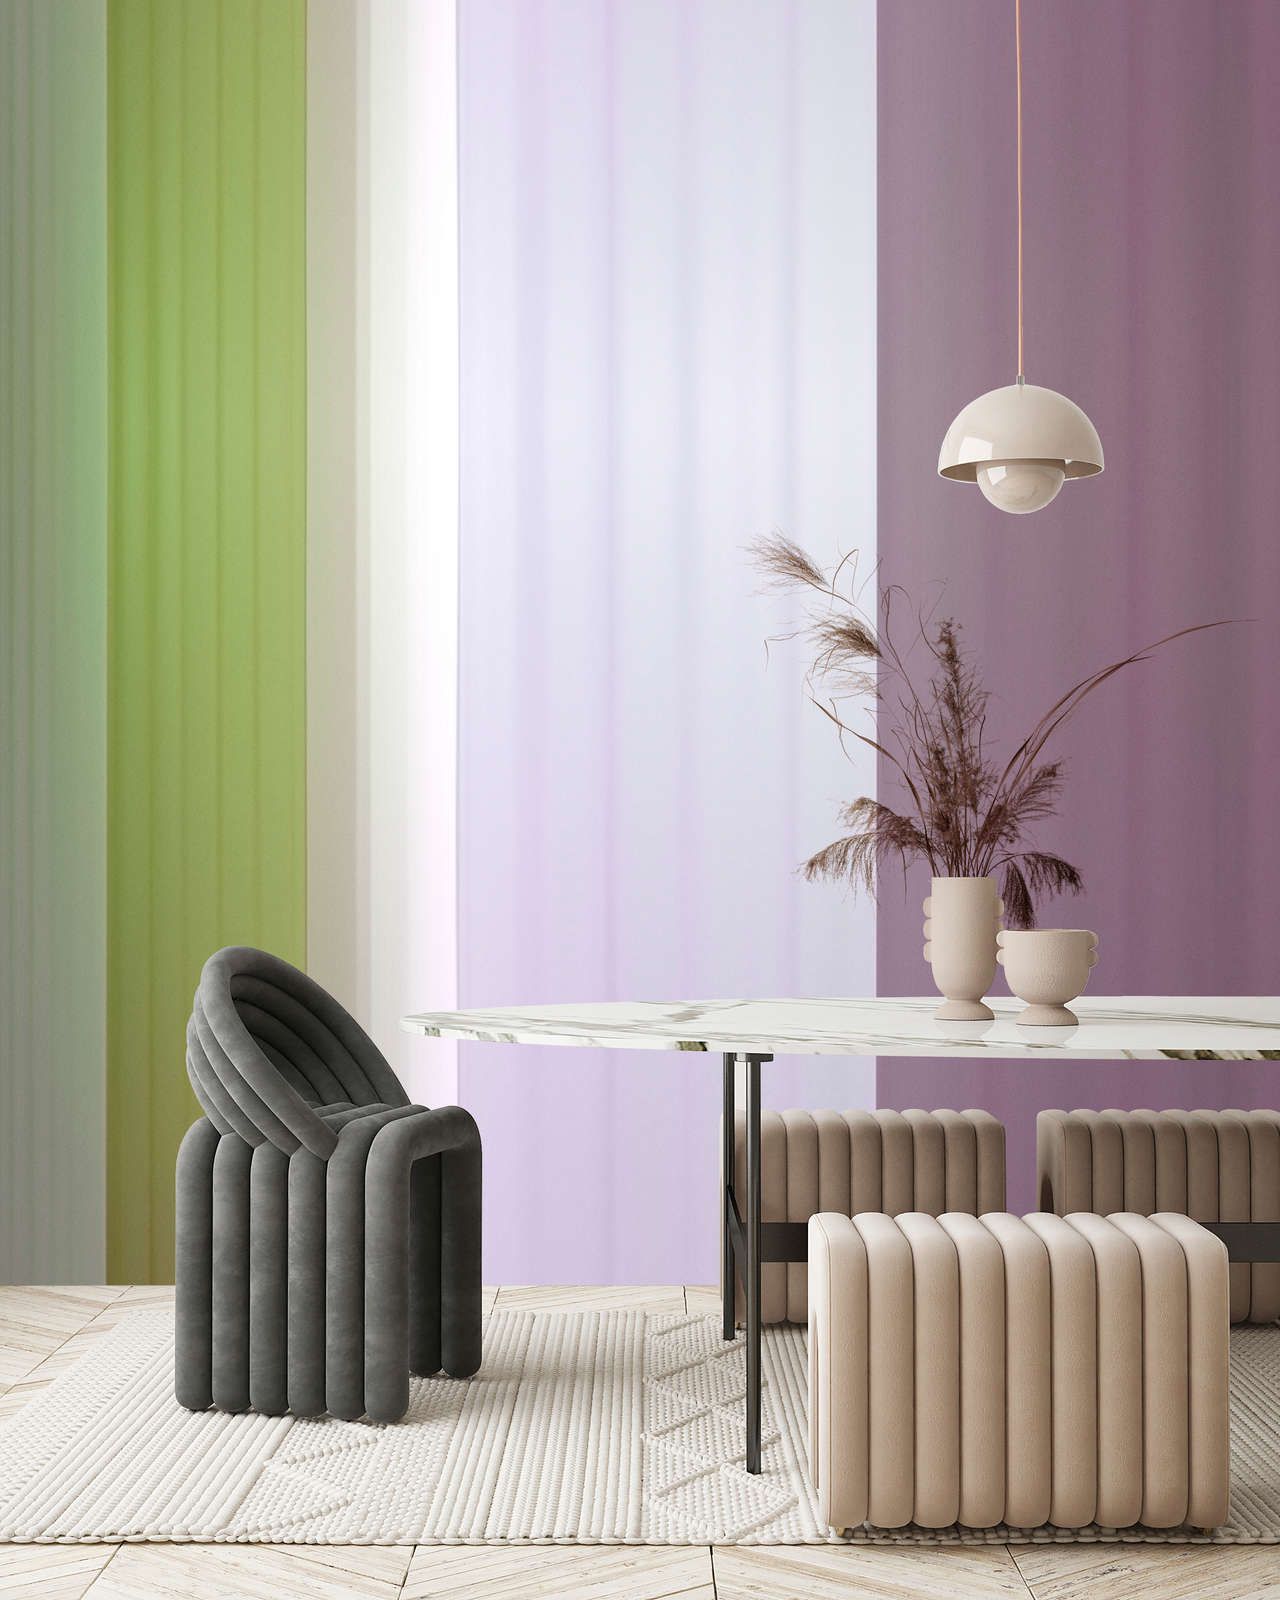             Photo wallpaper »co-coloures 3« - colour gradient with stripes - green, lilac, purple | matt, smooth non-woven
        